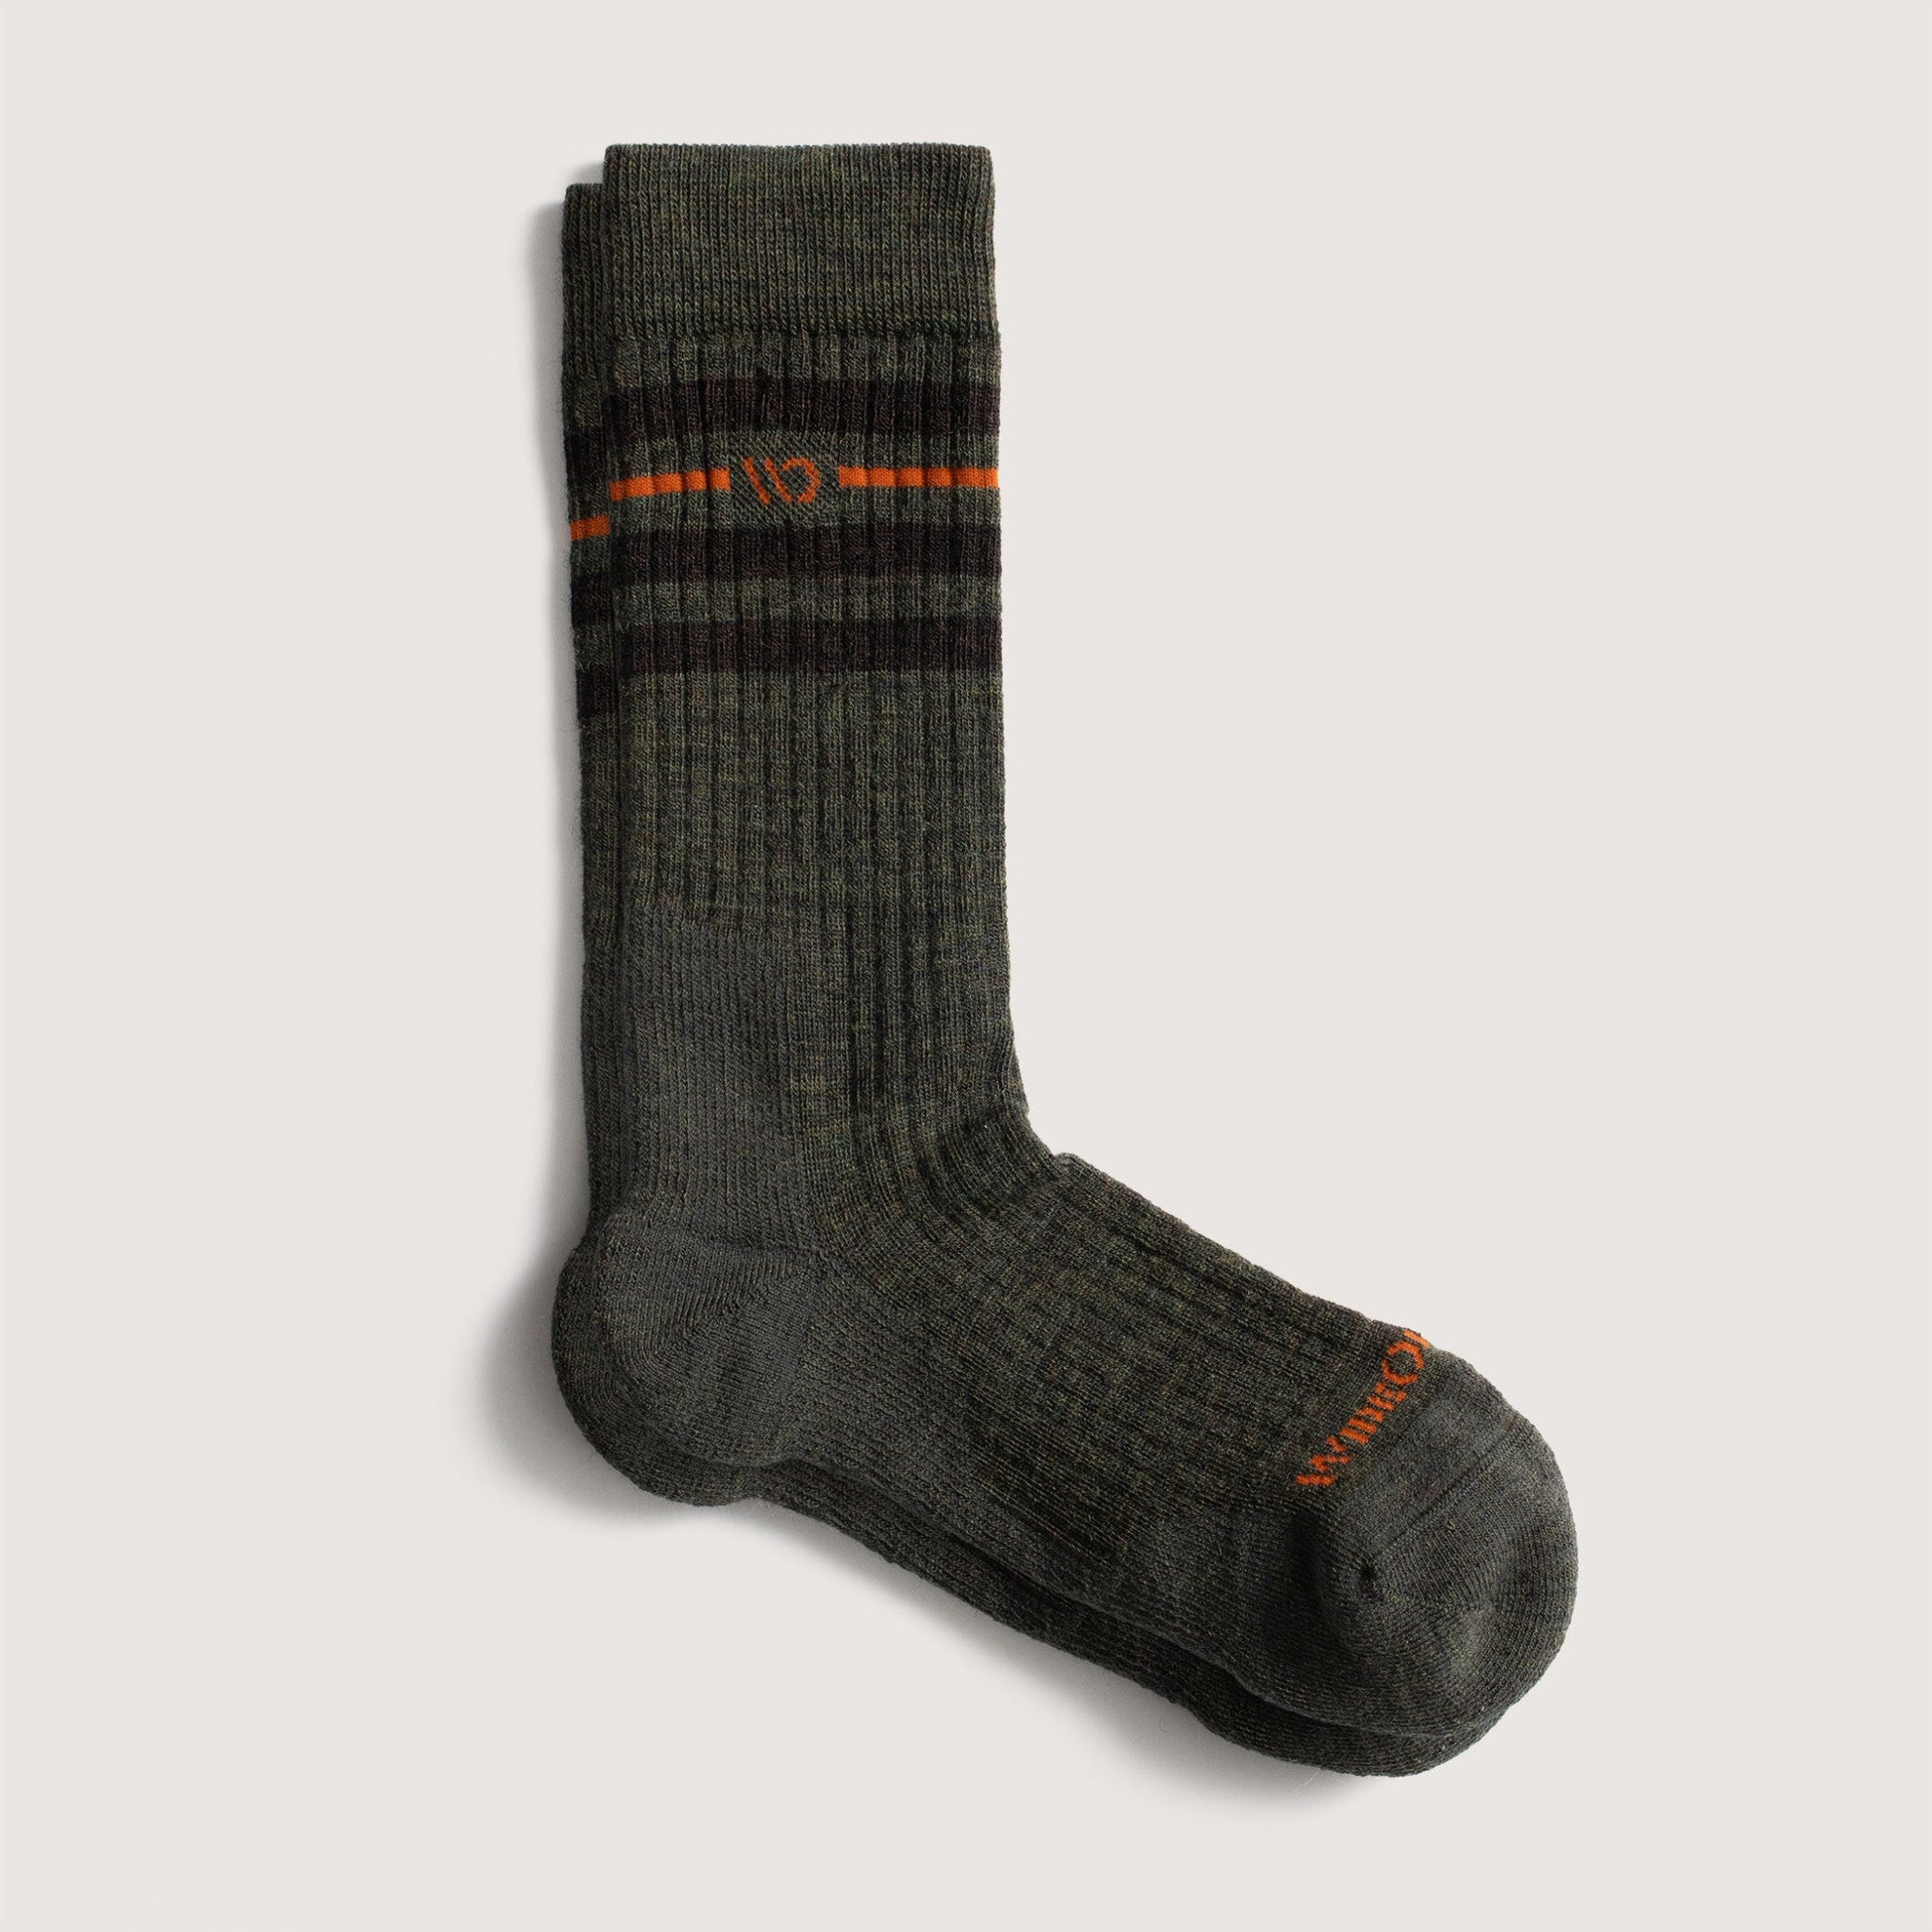 Flat socks orange logo, forest green body, and black stripes below the cuff --Light Gray/Denim/Forest